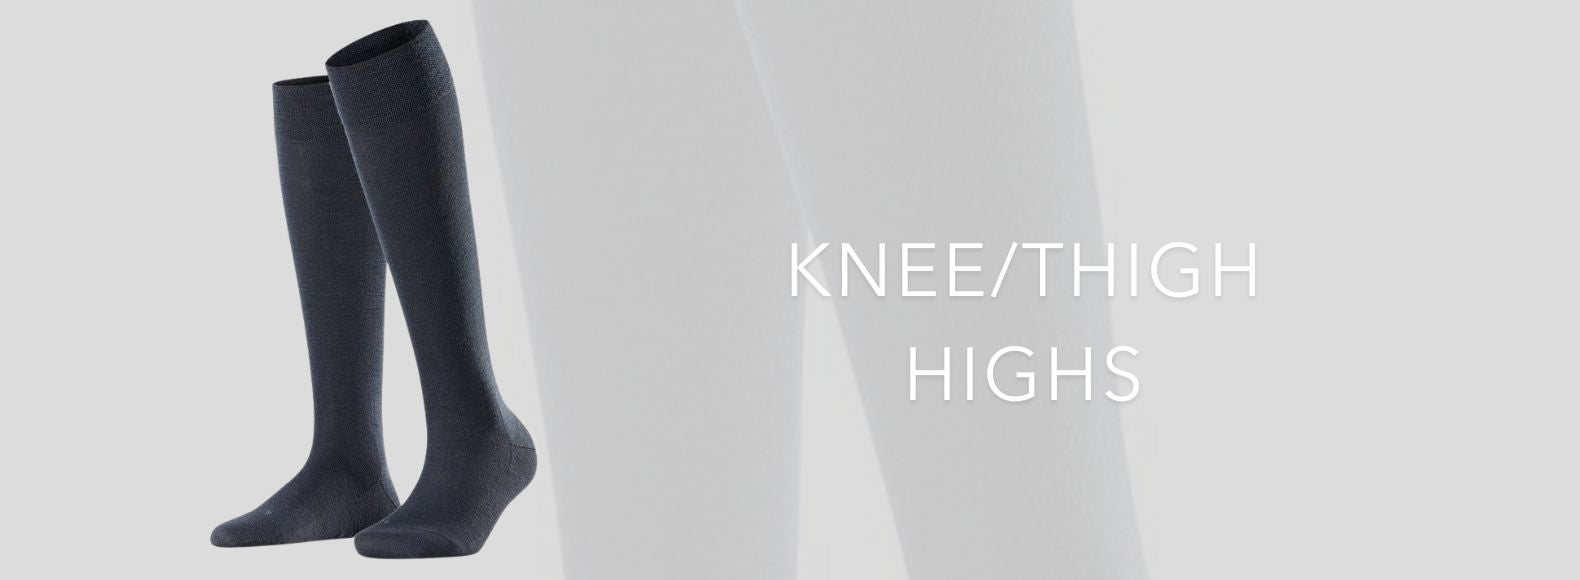 knee high socks Collections